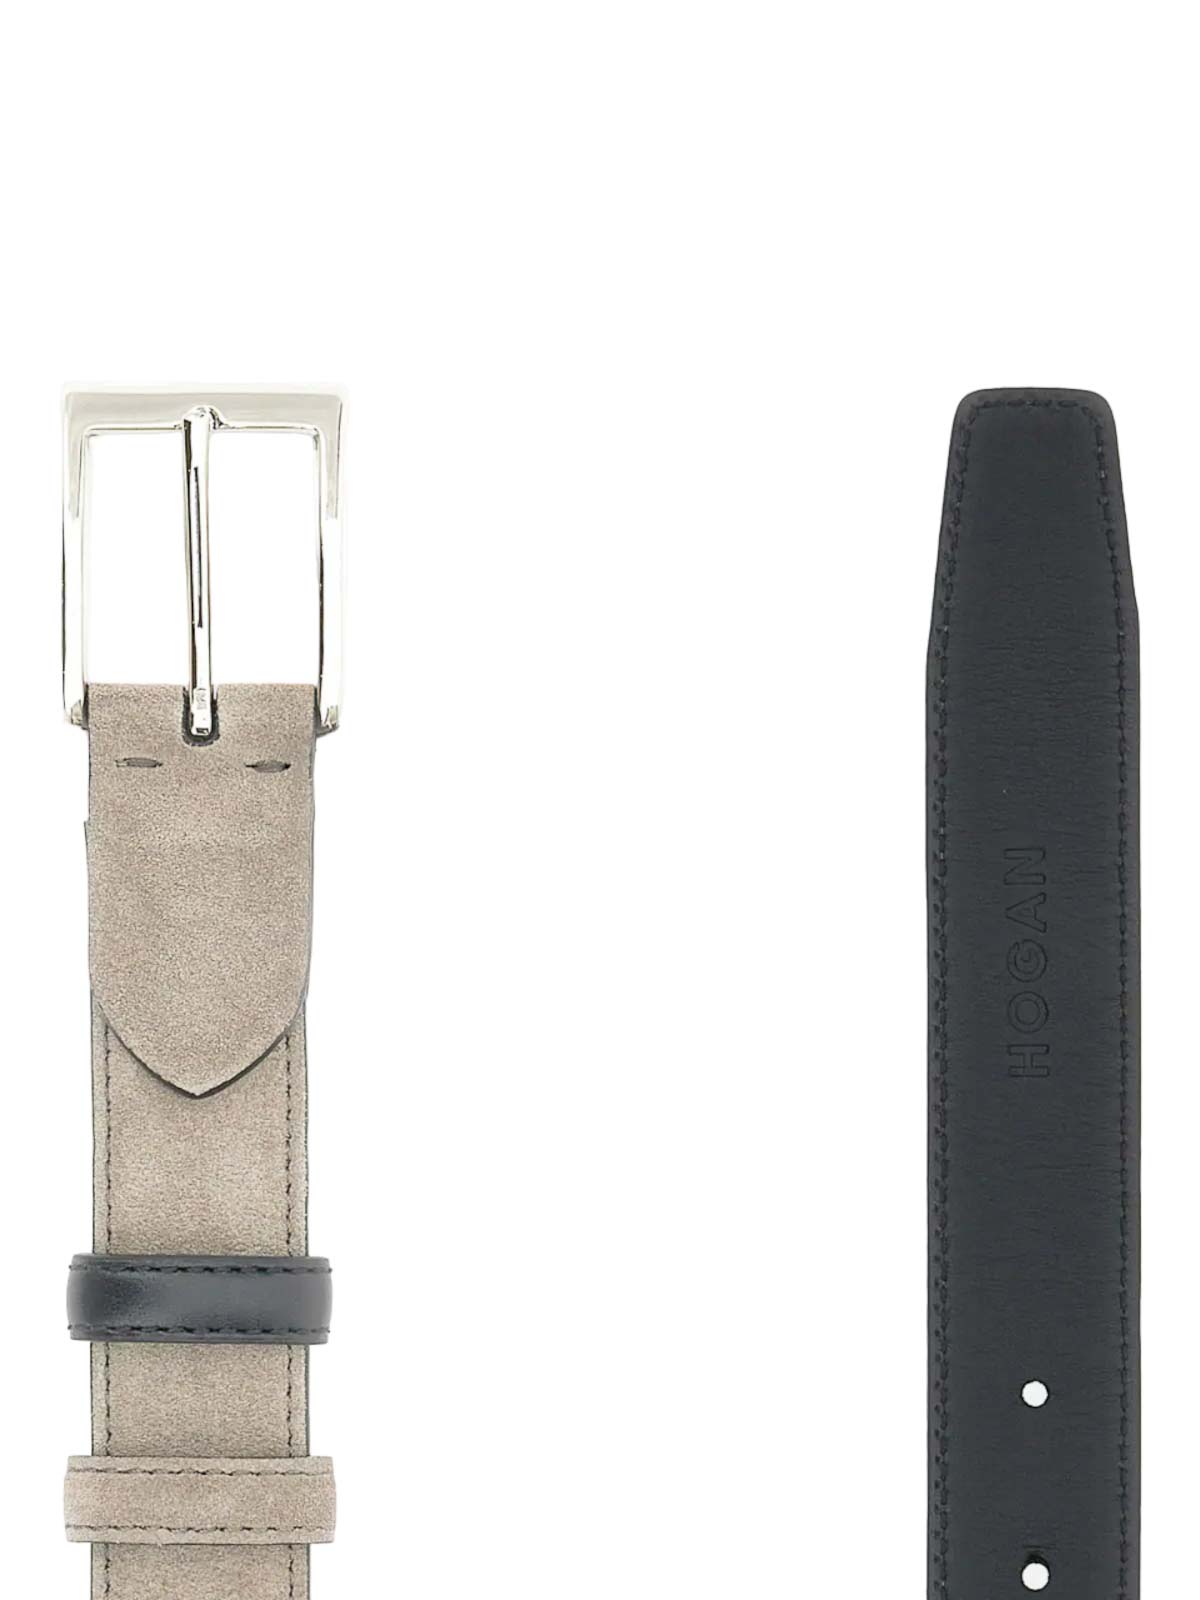 Shop Hogan Leather Belt In Grey